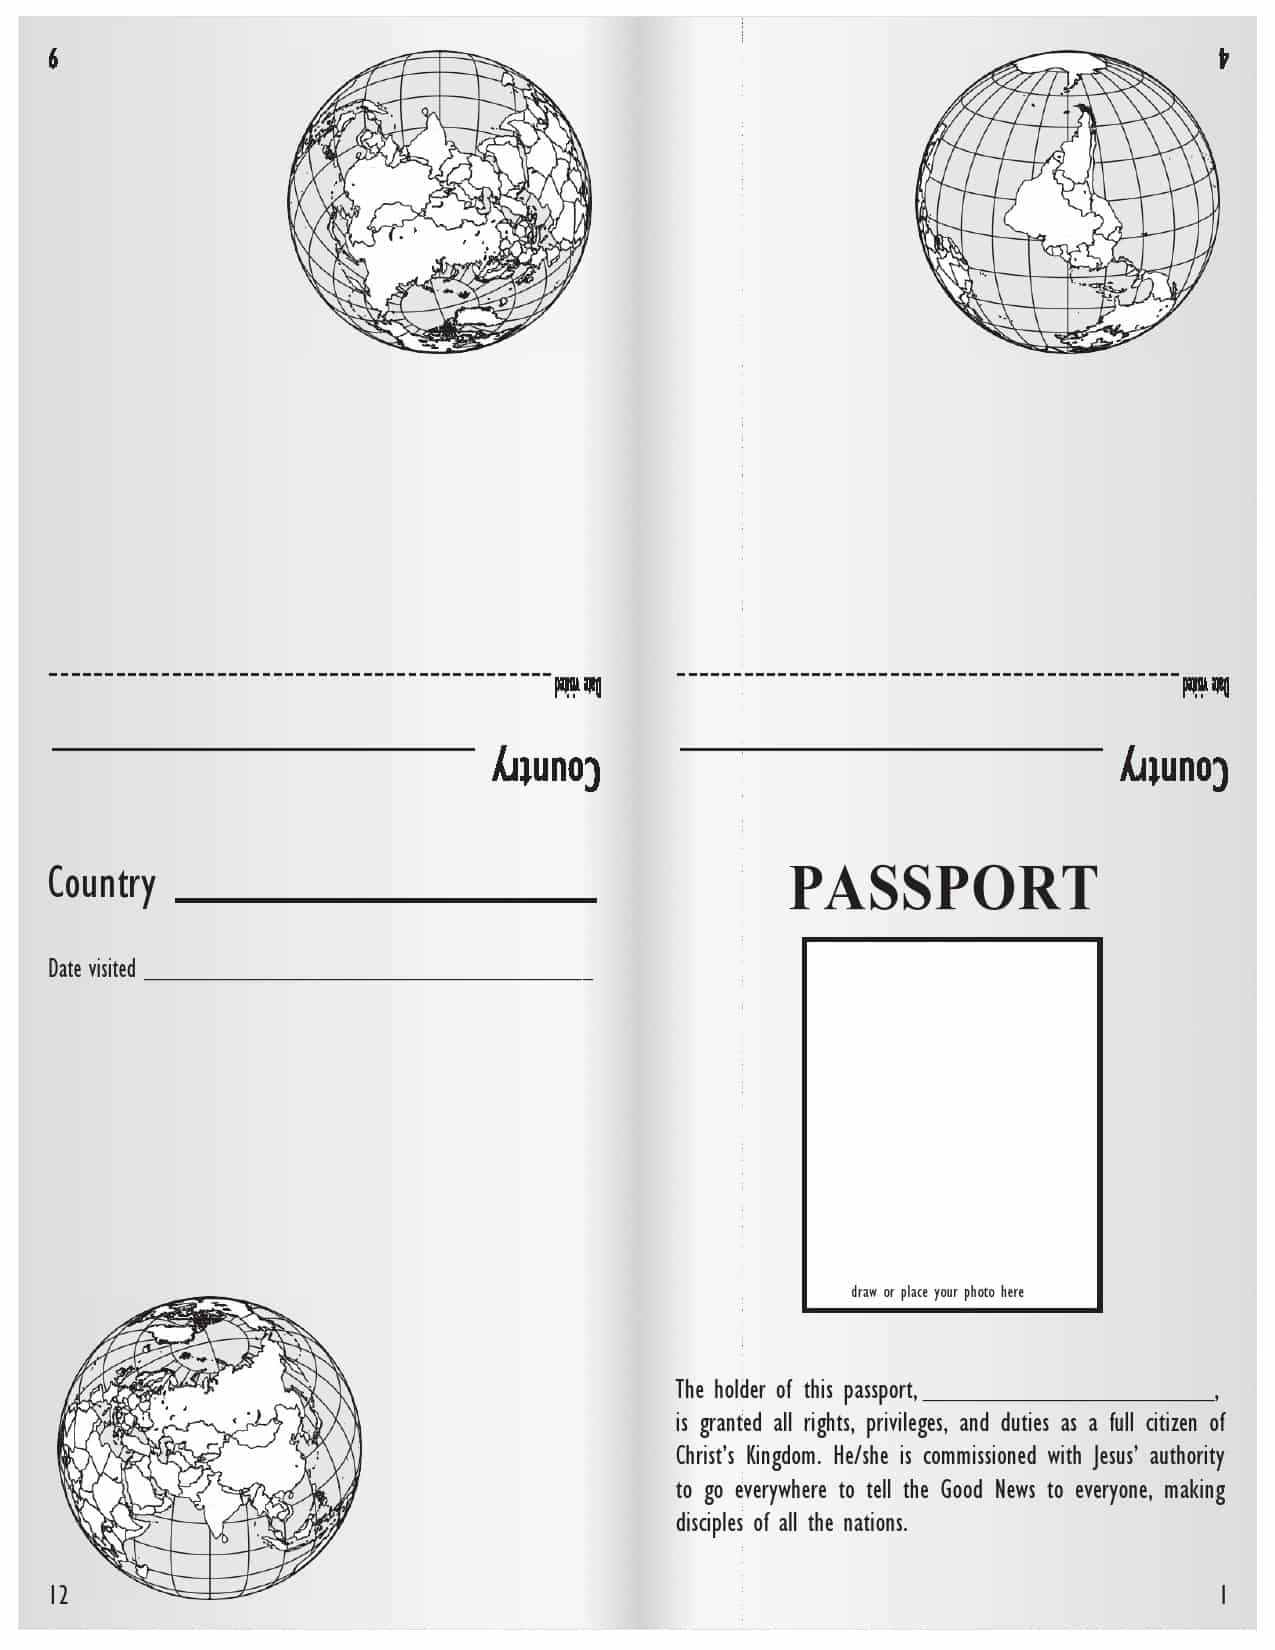 11-free-passport-templates-word-excel-pdf-formats